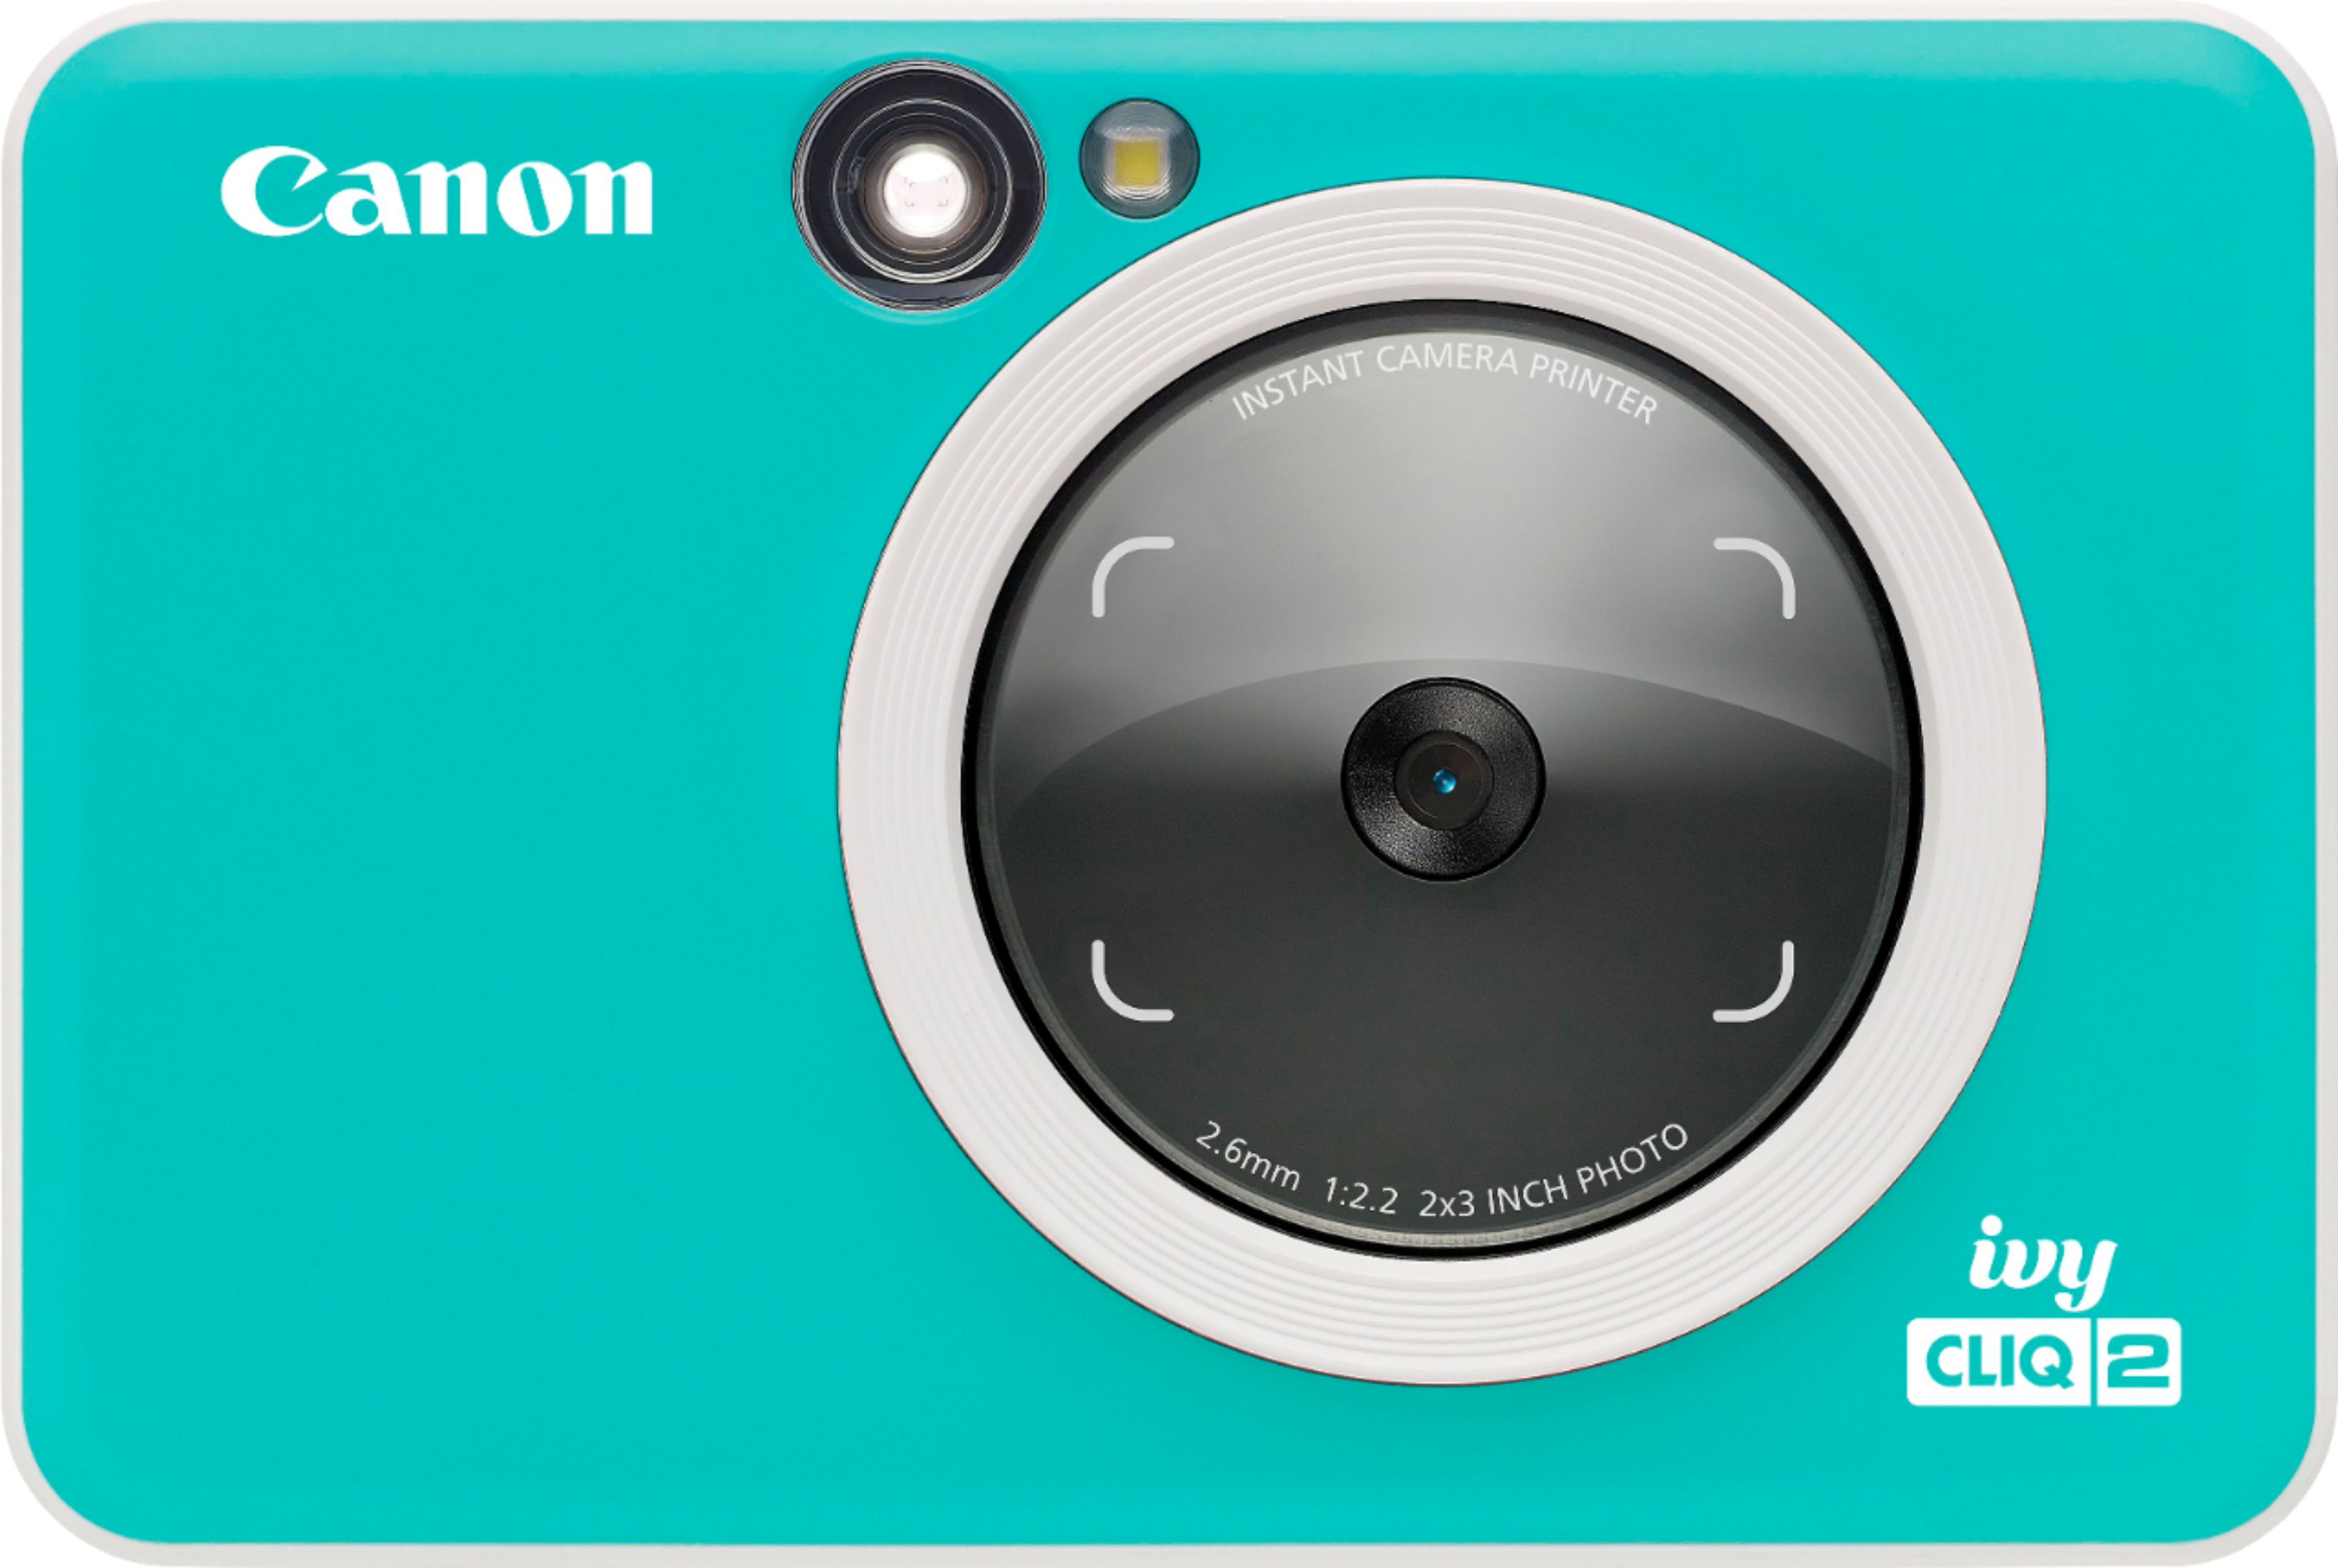 excelleren hebzuchtig Tram Canon Ivy CLIQ2 Instant Film Camera Turquoise 4520C002 - Best Buy